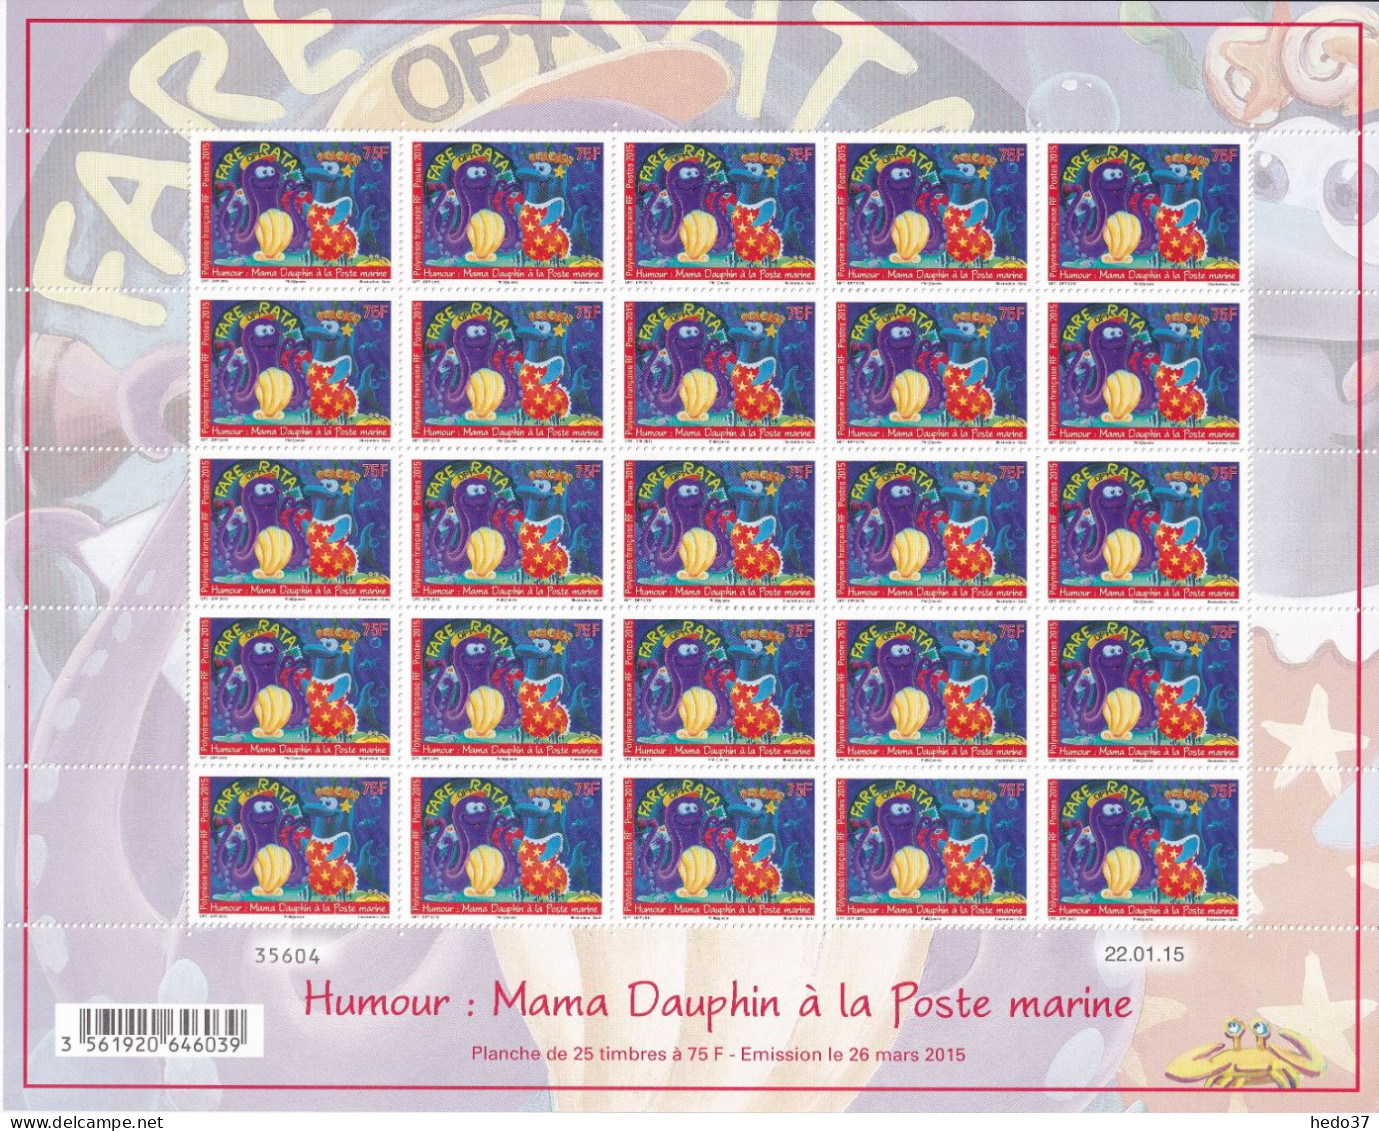 Polynésie N°1084 - Feuille Entière - Neuf ** Sans Charnière - TB - Unused Stamps